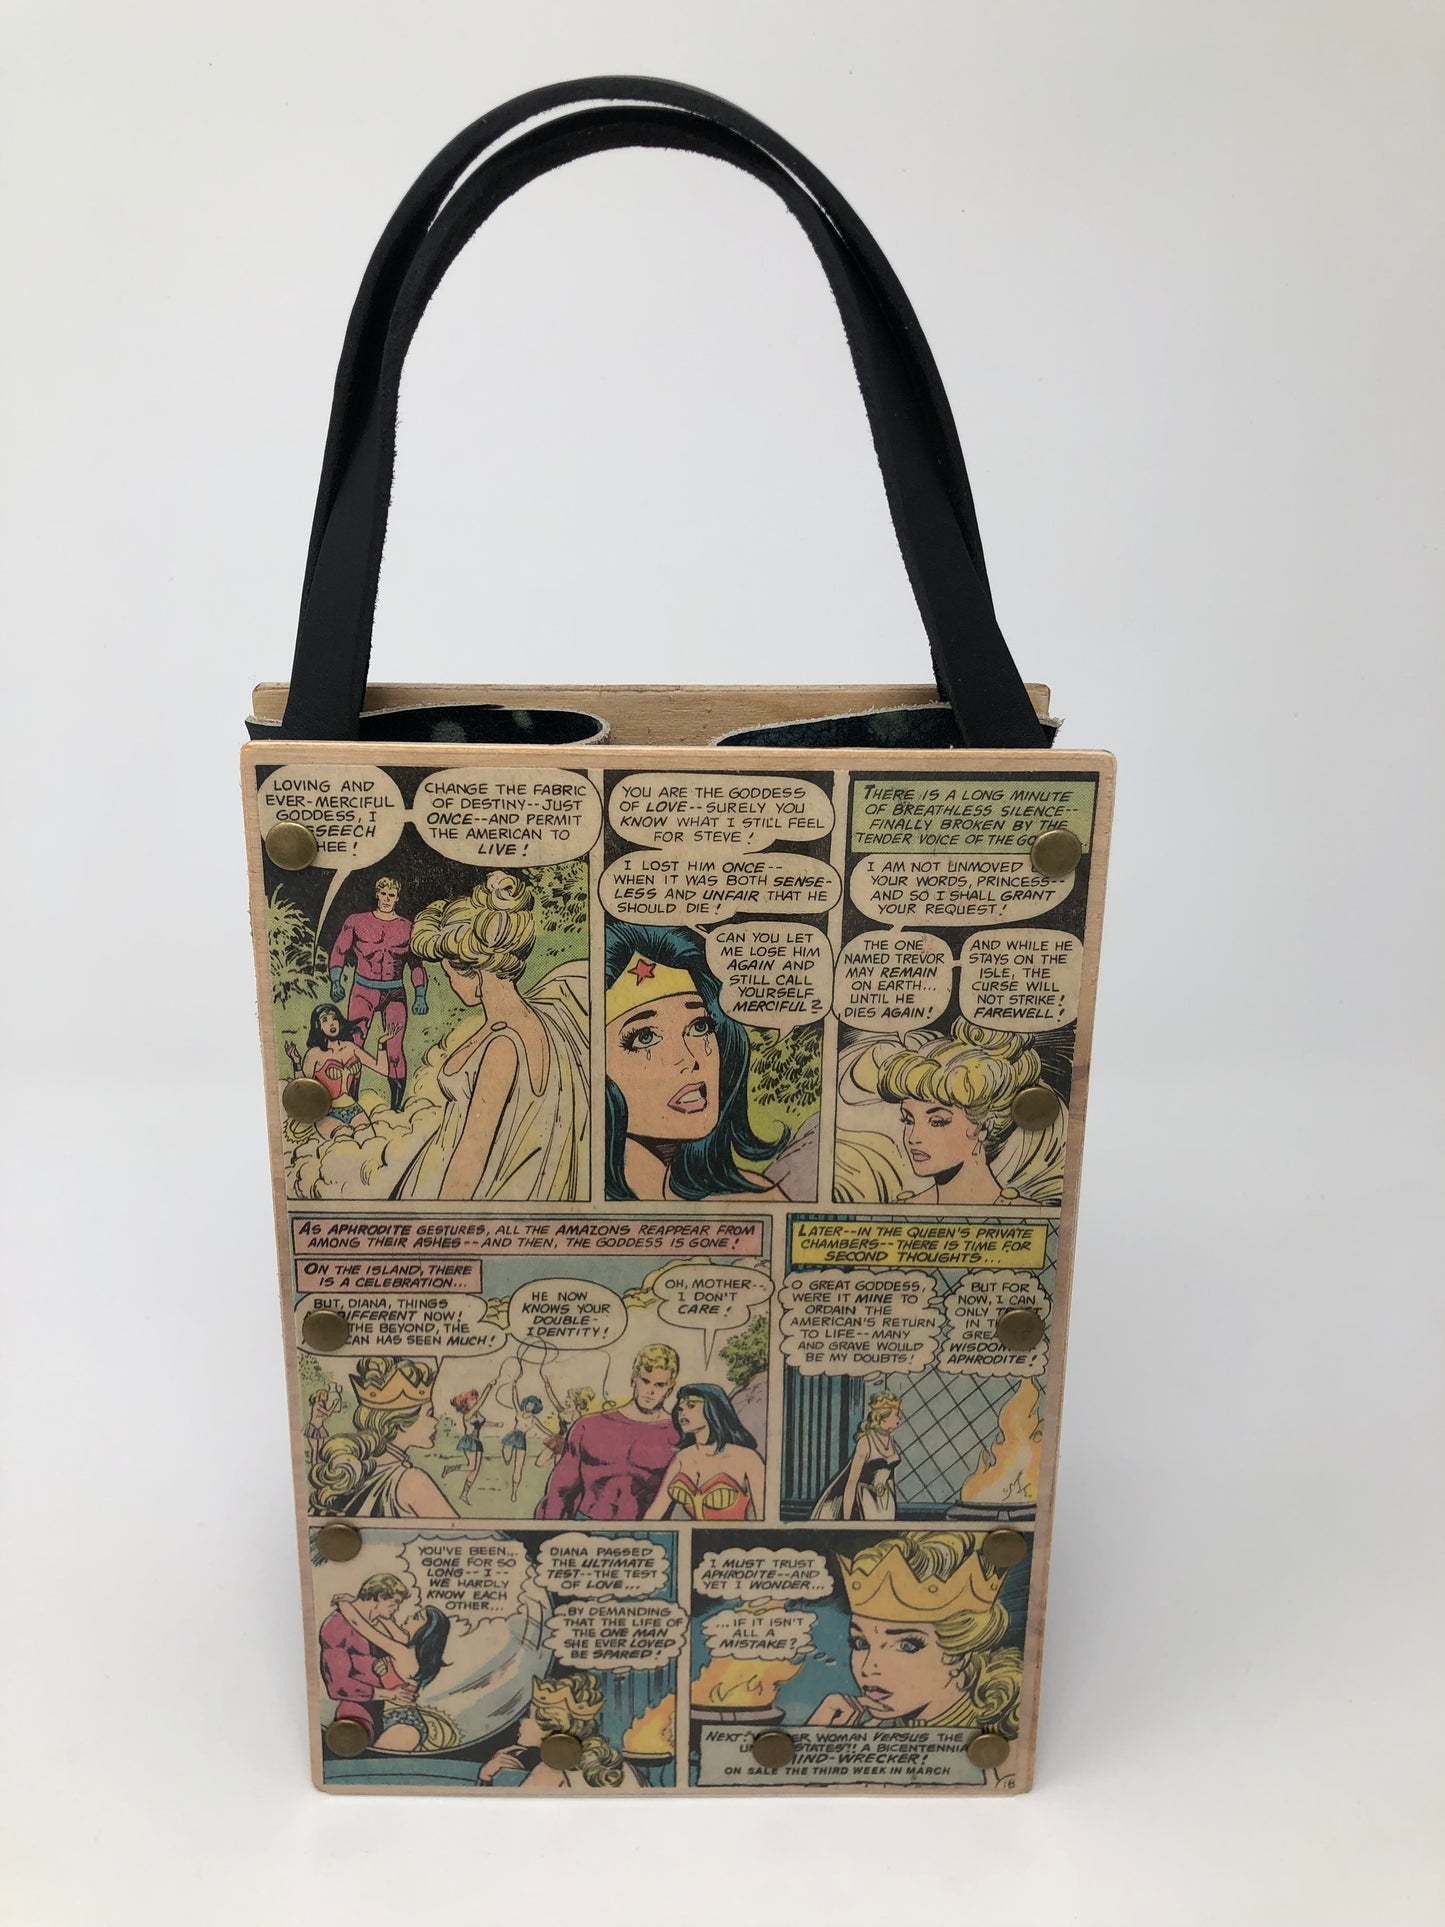 Vintage Wonder Woman Handbag - Steve Trevor